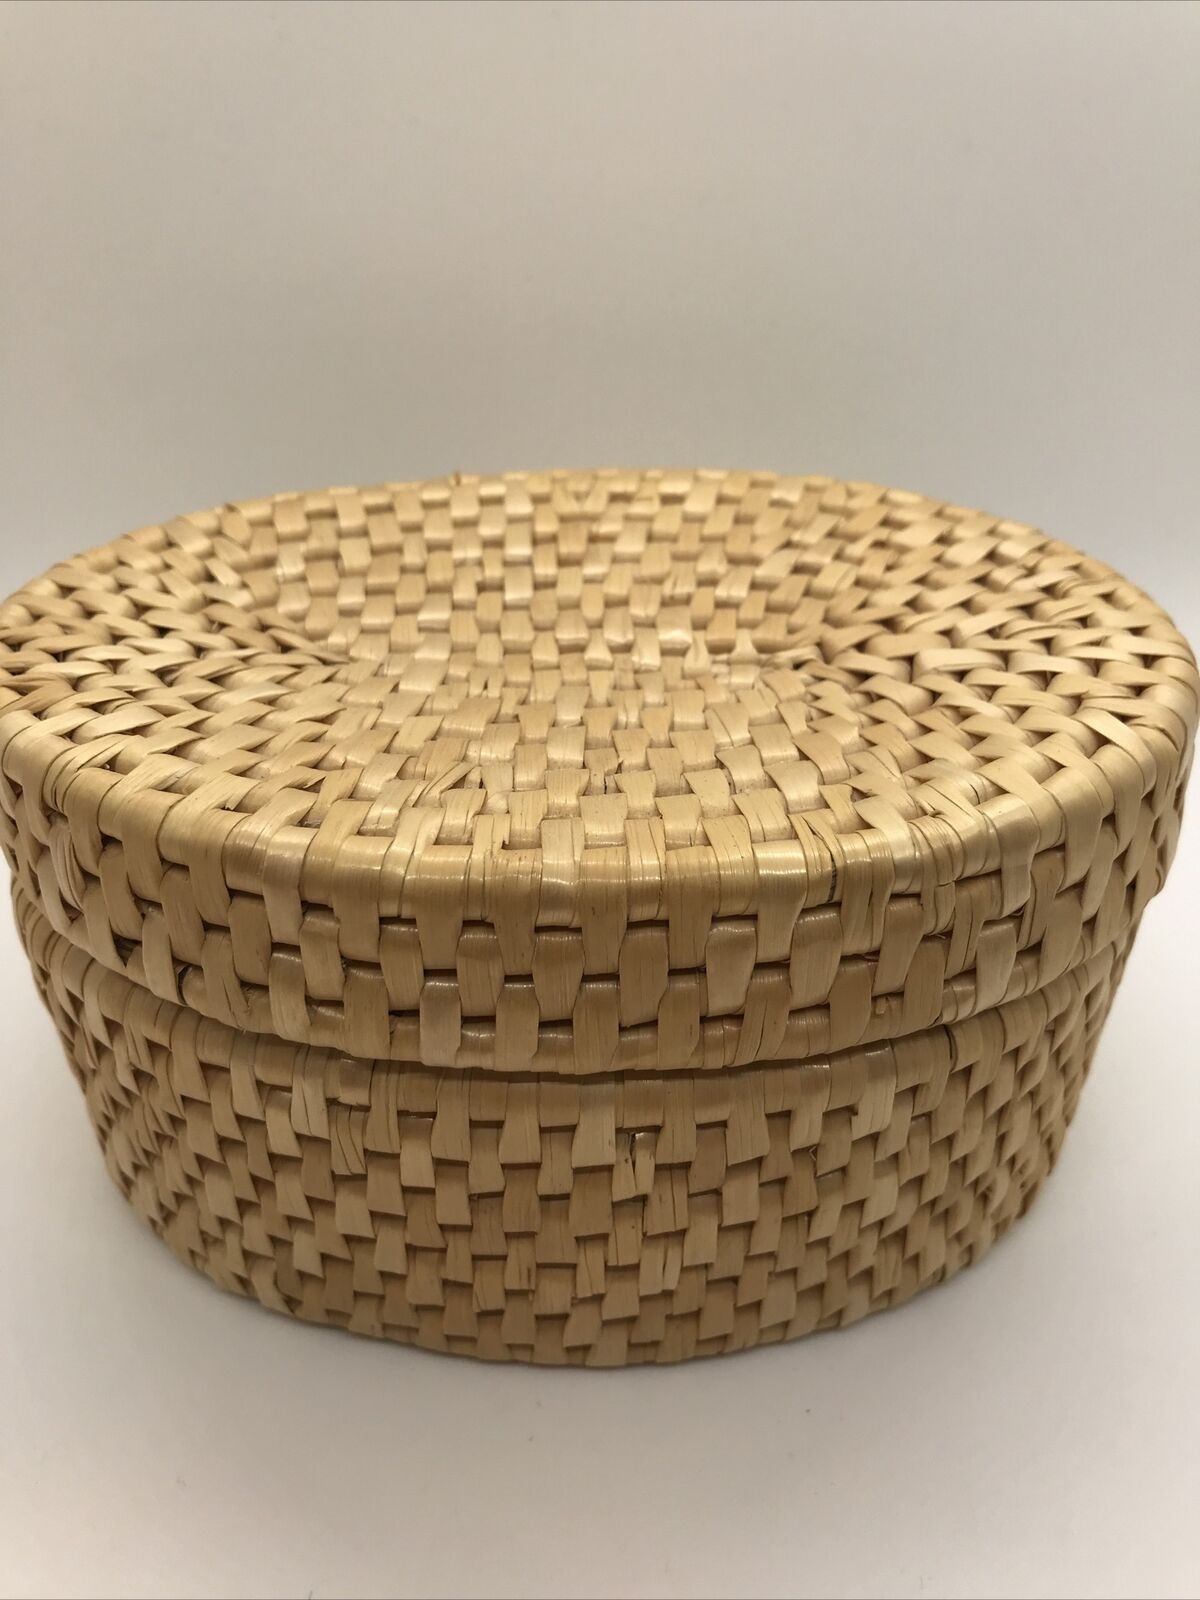 VTG Handmade Woven Round Straw Trinket Stash Box With Lid Home Decor